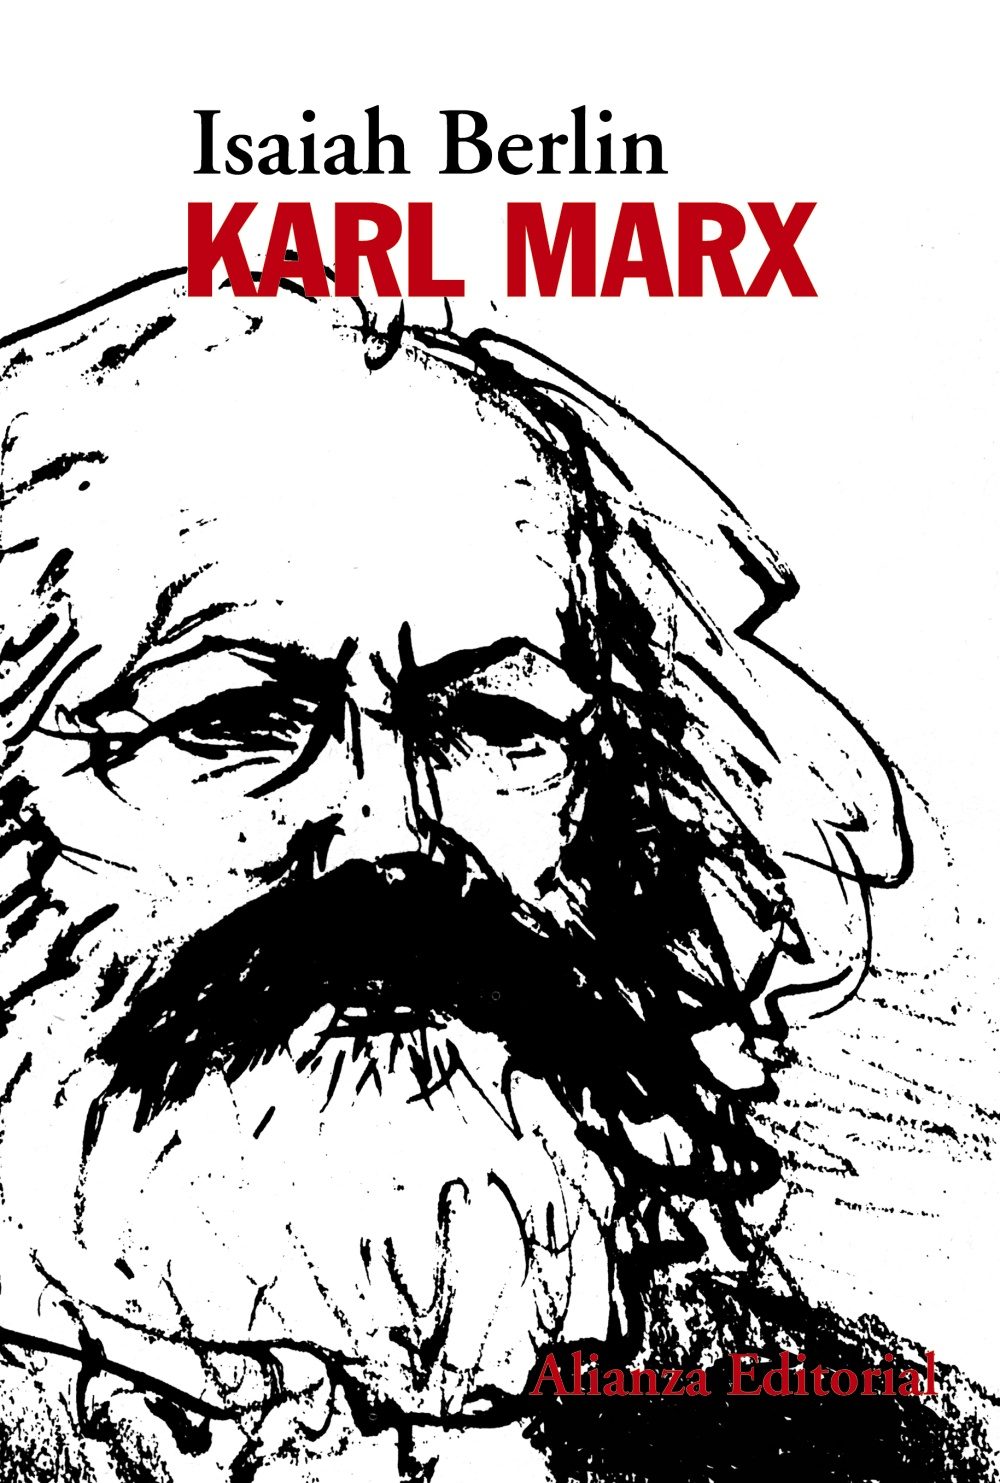 6Karl Marx